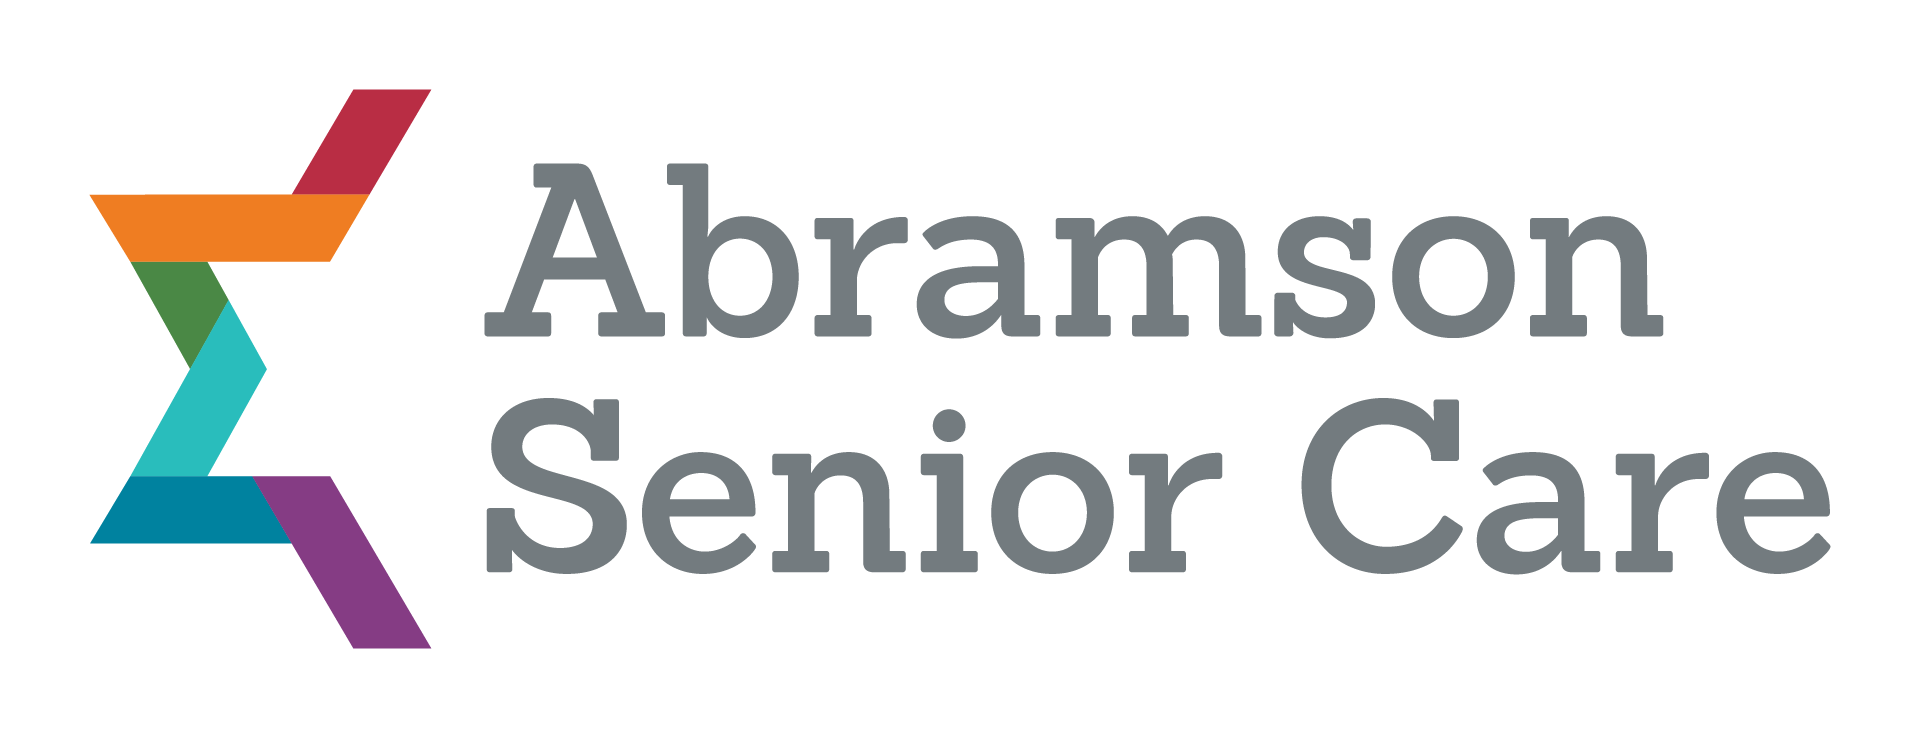 Abramson Senior Care Announces New Leadership and New Strategic Direction